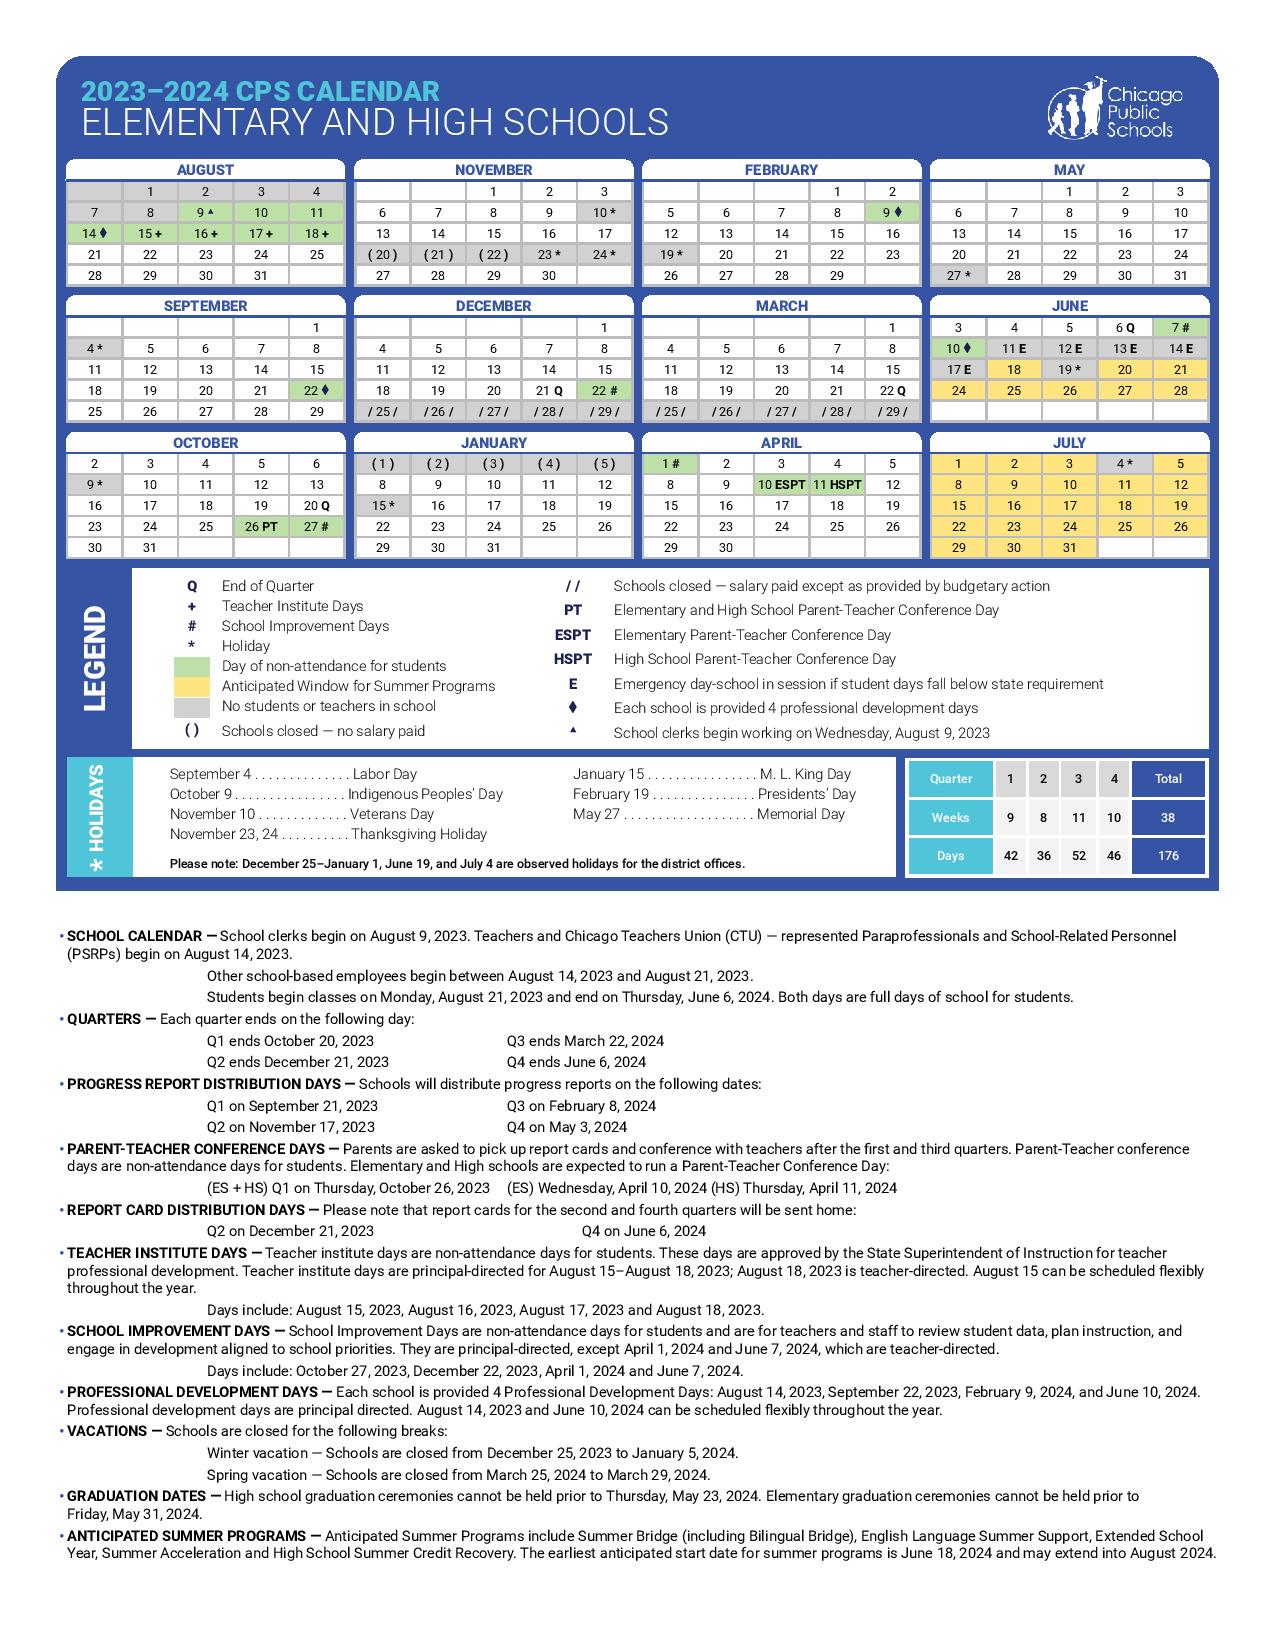 Chicago Public Schools Calendar Holidays 20232024 PDF